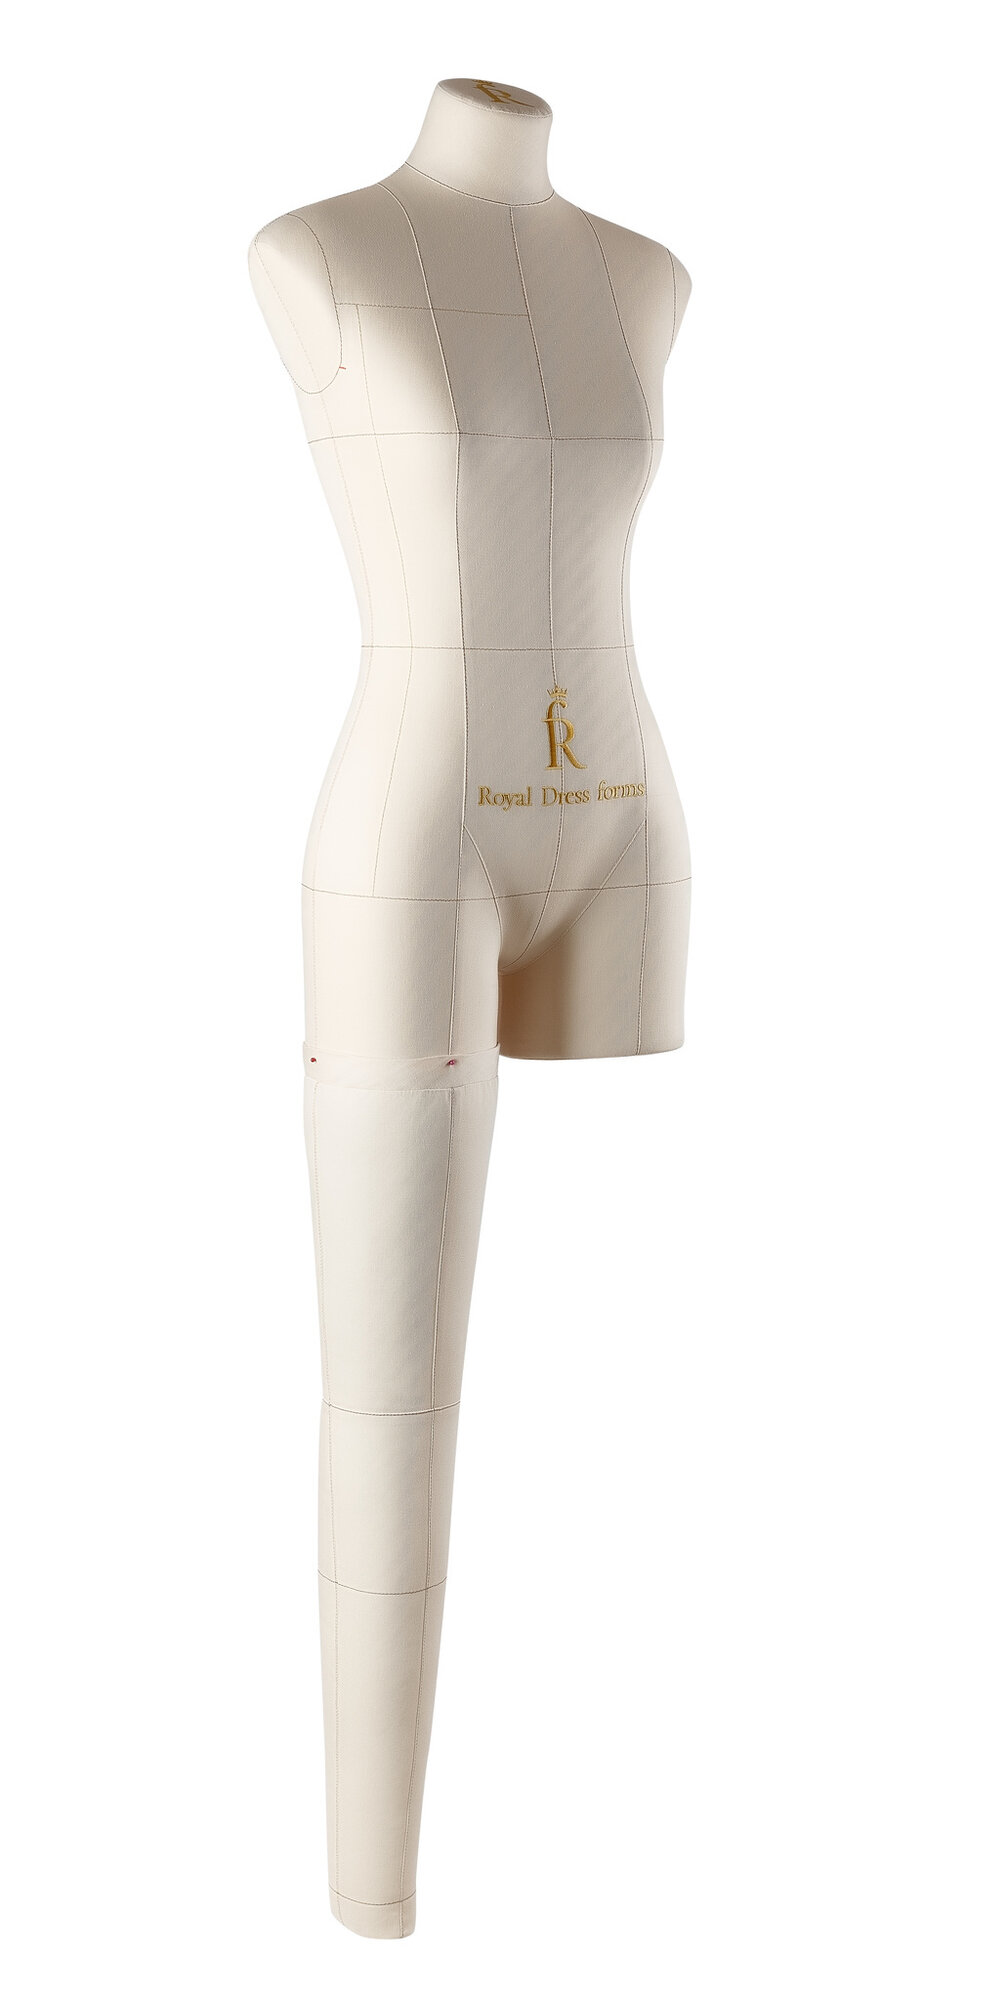 Нога для манекена Моника Royal Dress forms, размер 46